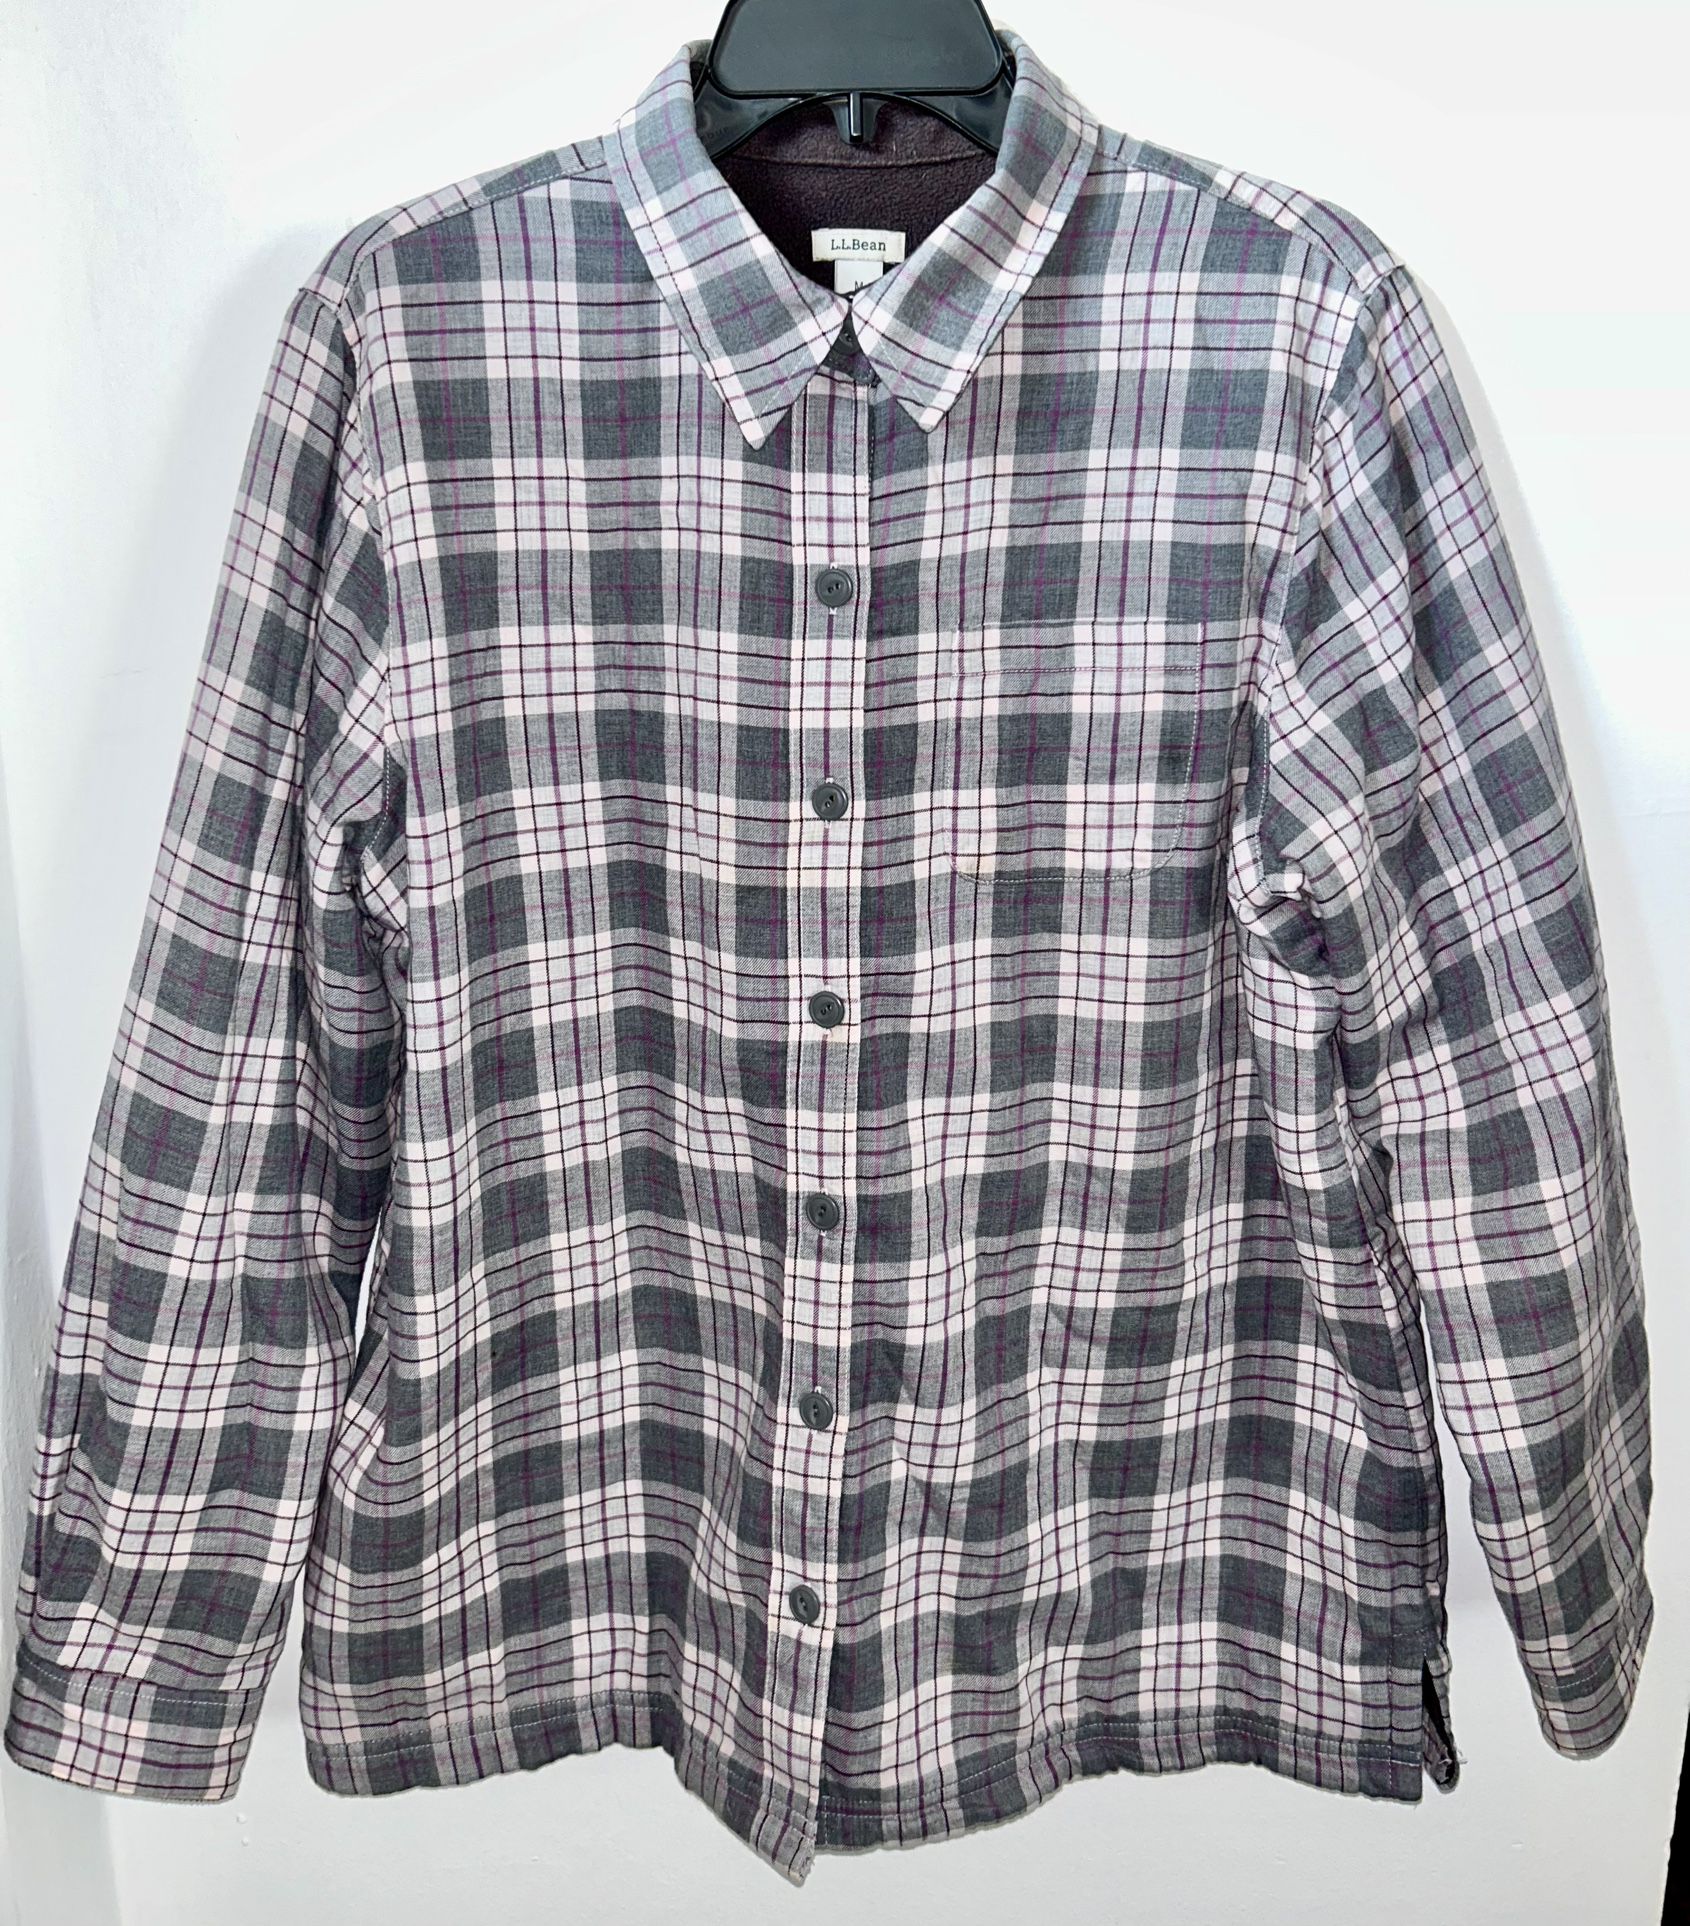 LL Bean Women’s Fleece Lined Flannel Shirt Size M Gray/Purple Plaid Button-Up